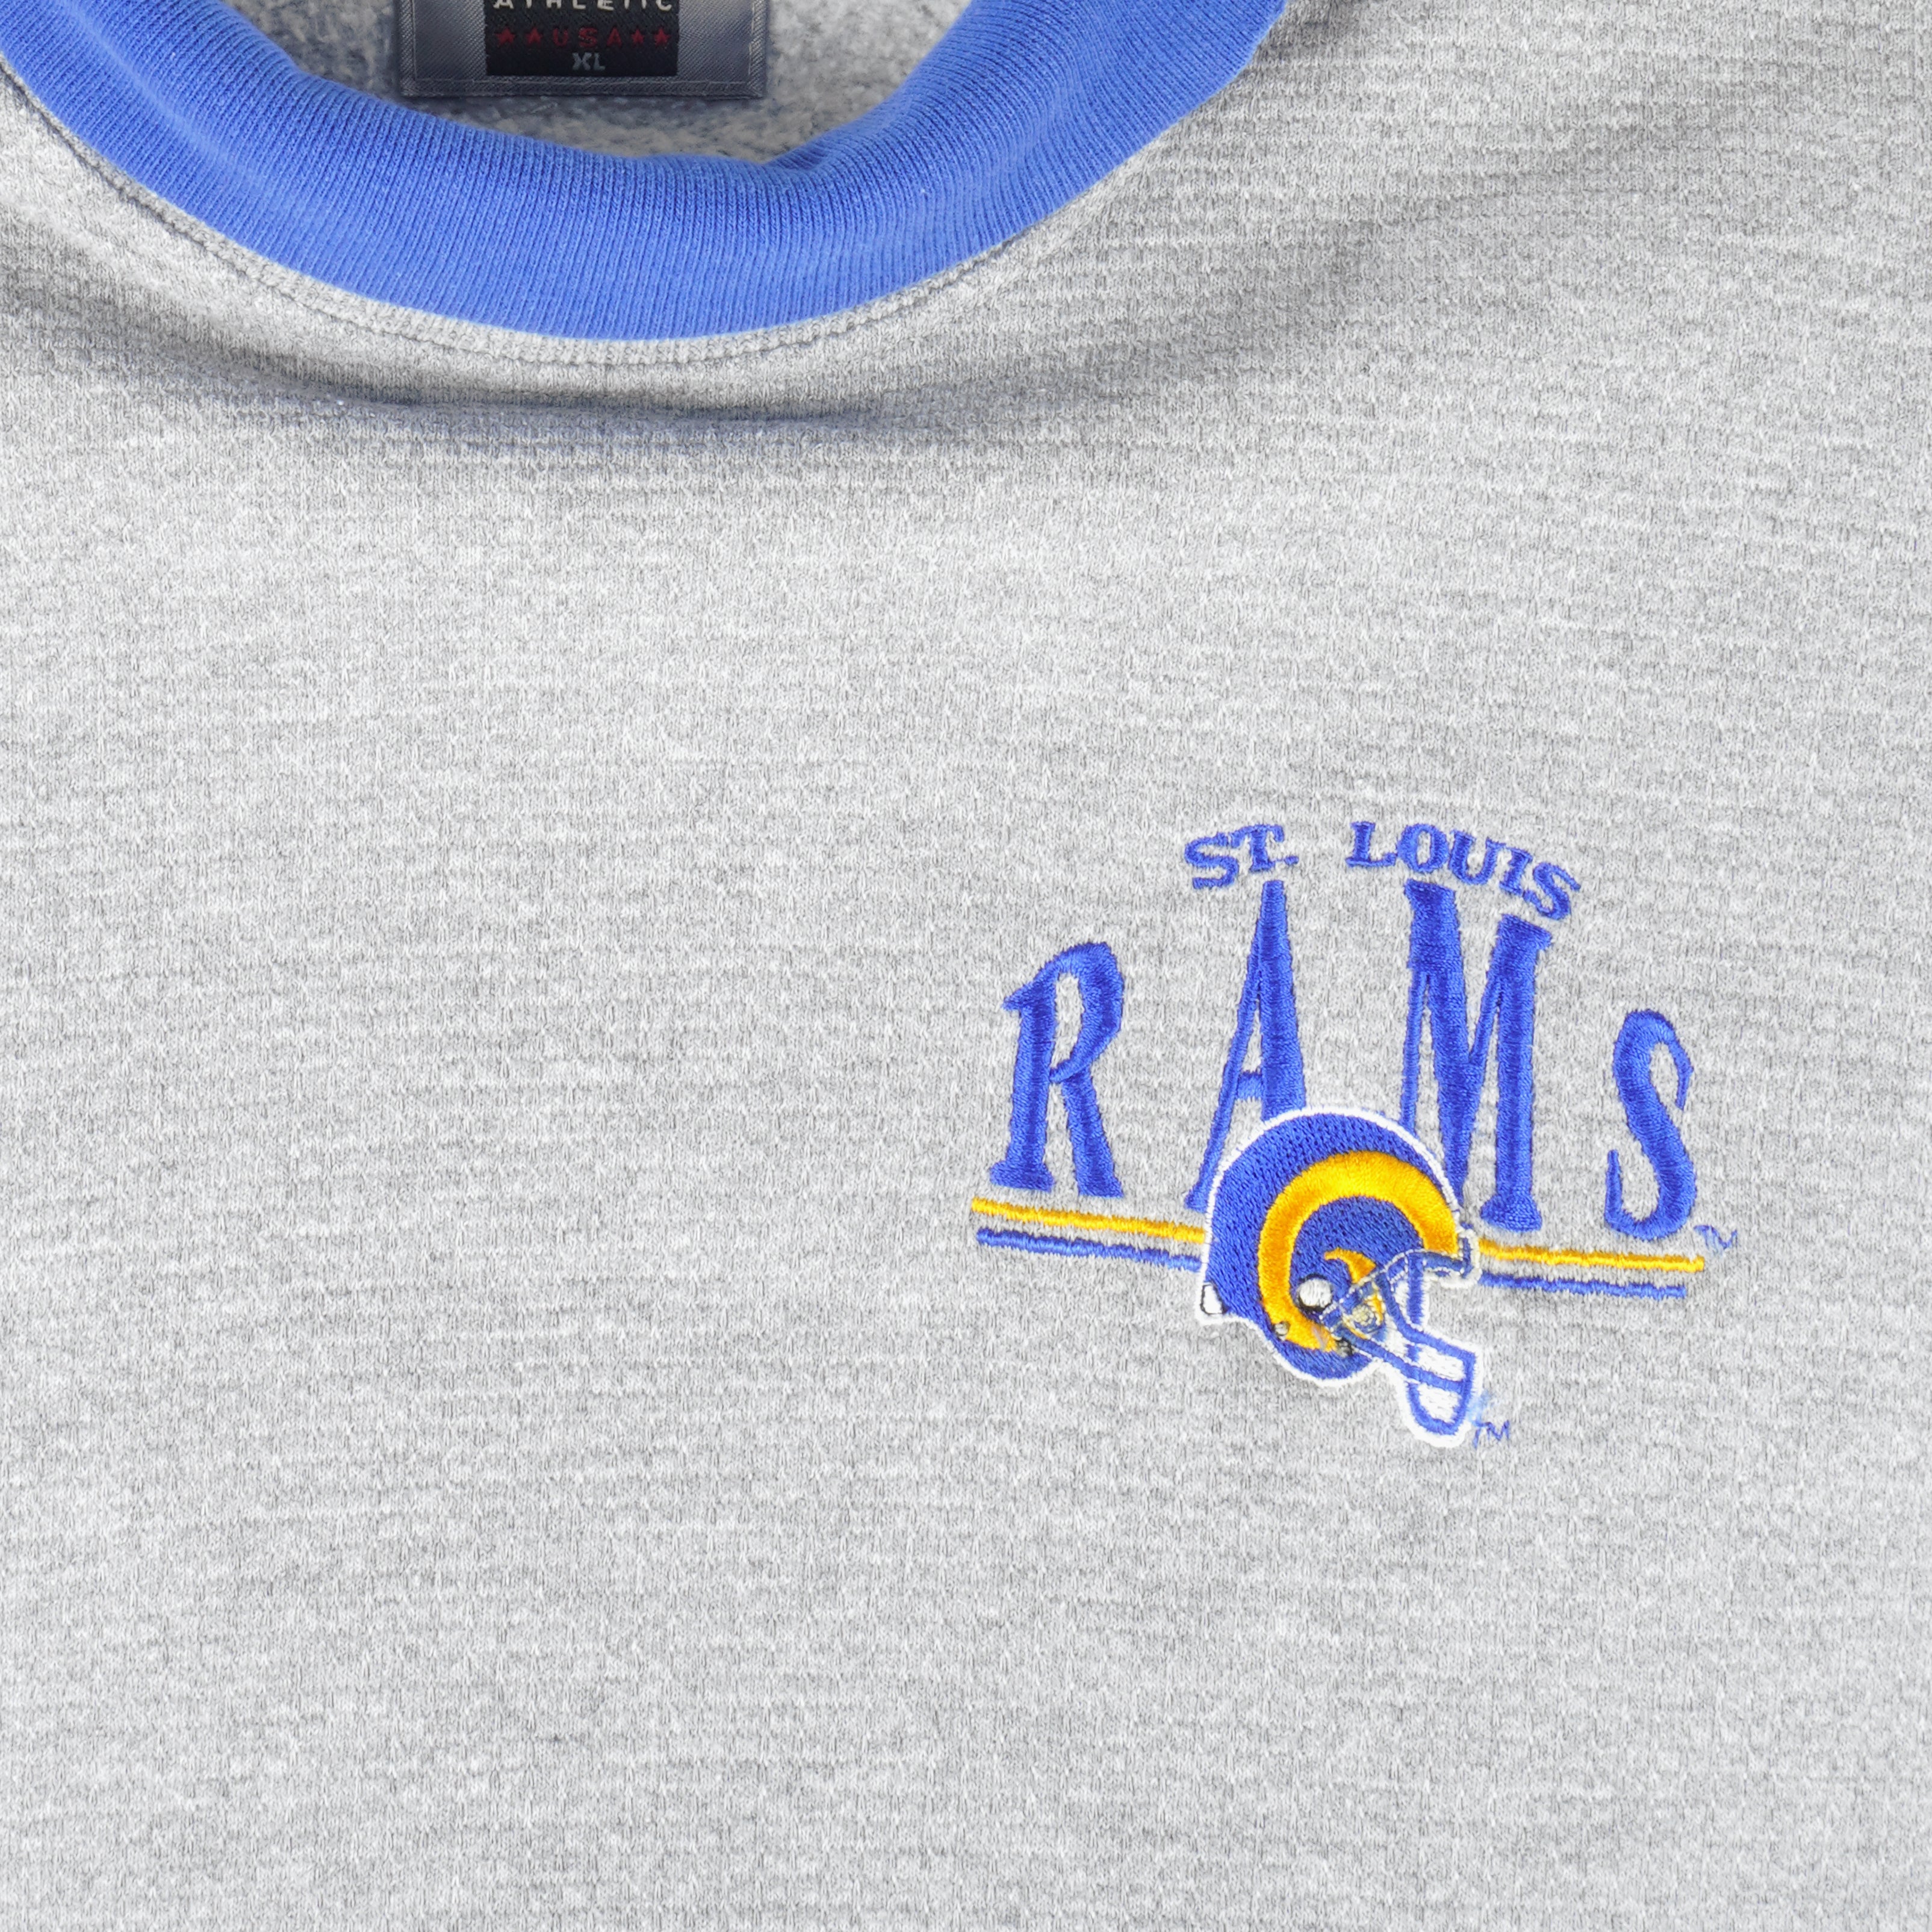 NFL St. Louis Rams Team Apparel Football Crew Neck T Shirt - Blue